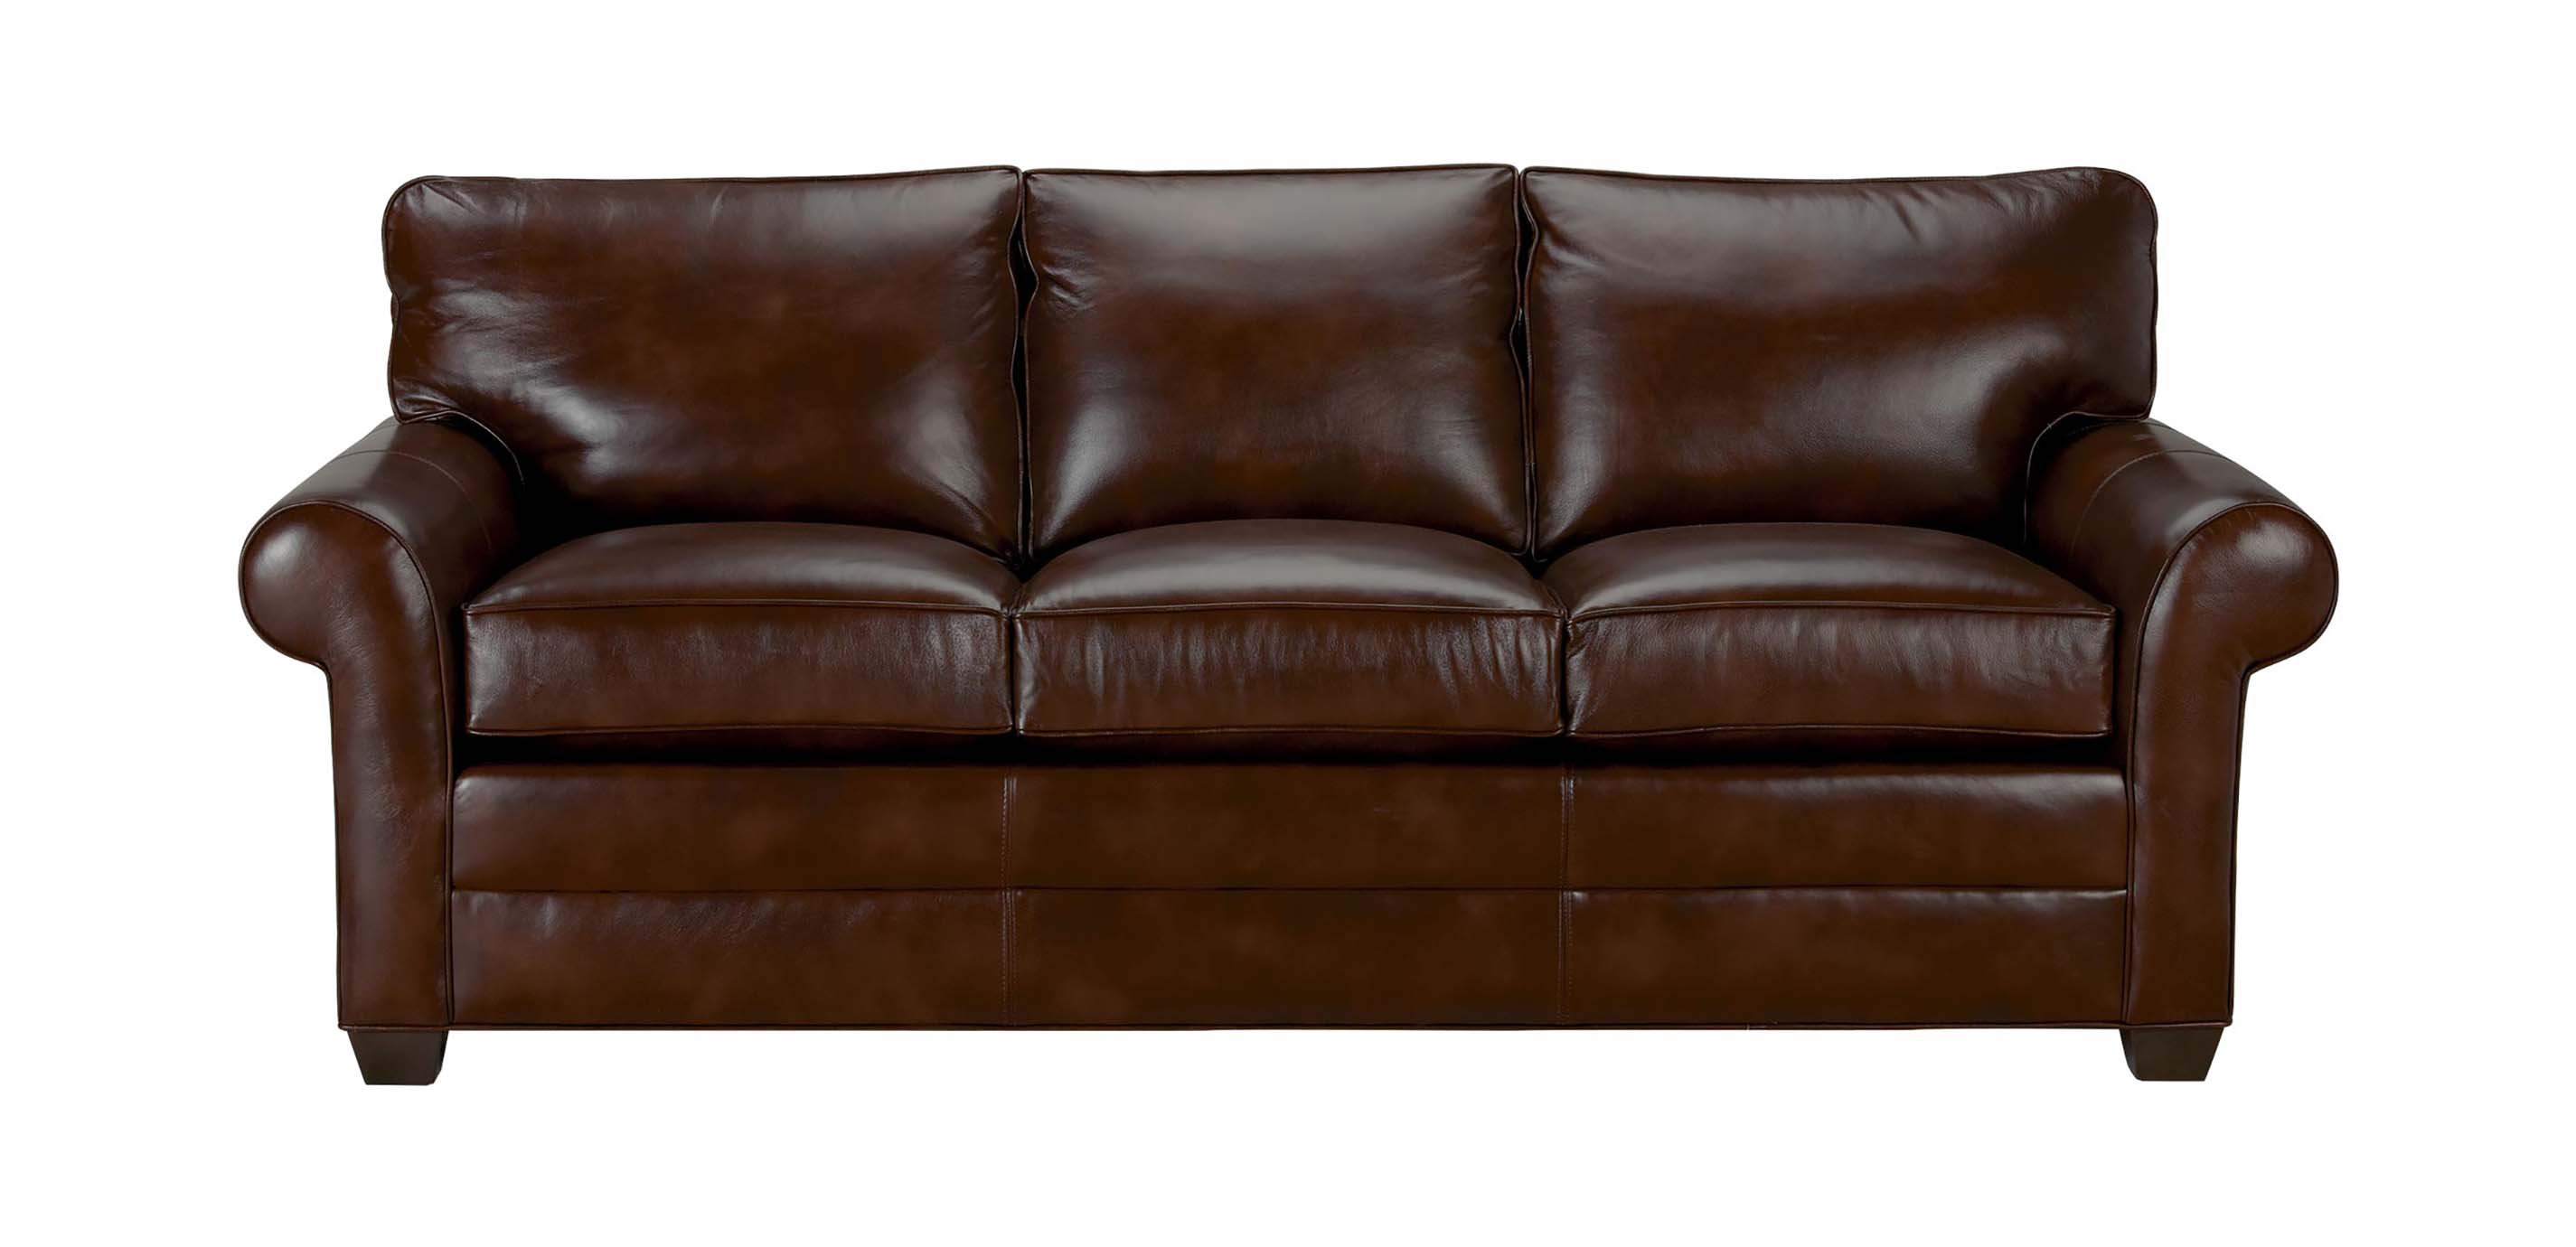 turner roll arm leather grand sofa